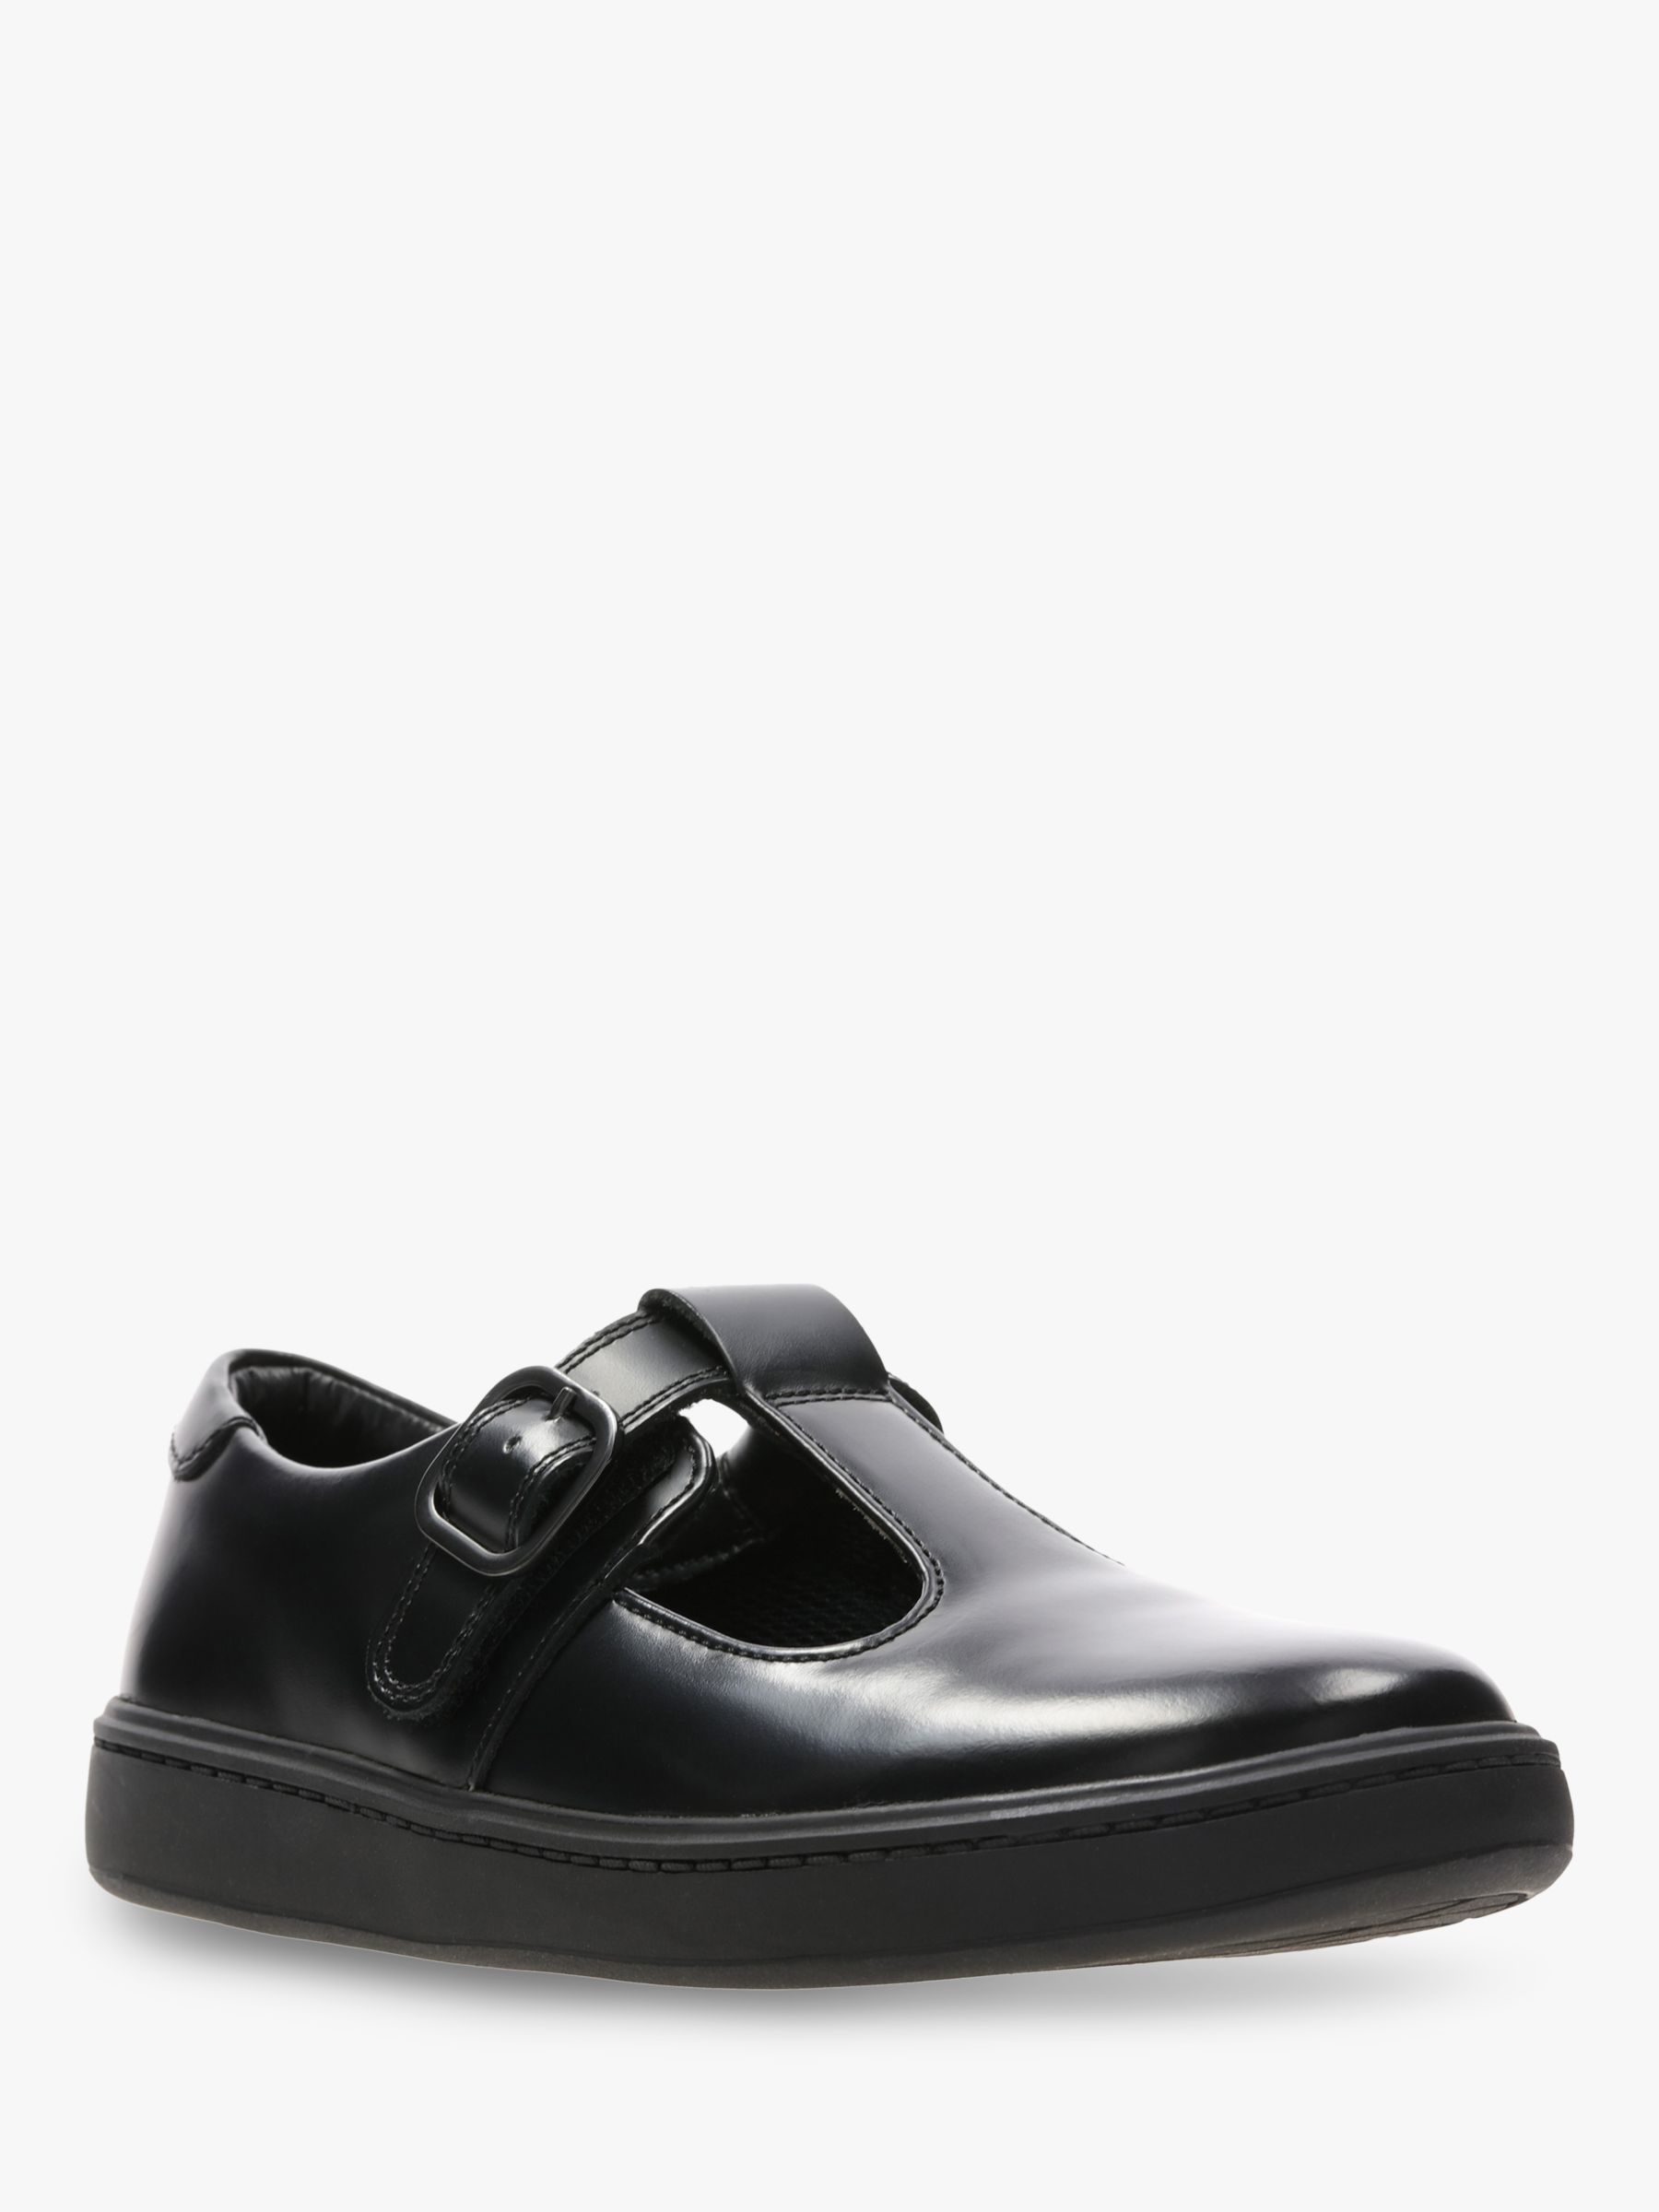 Street Soar Shoes, Black at John Lewis 